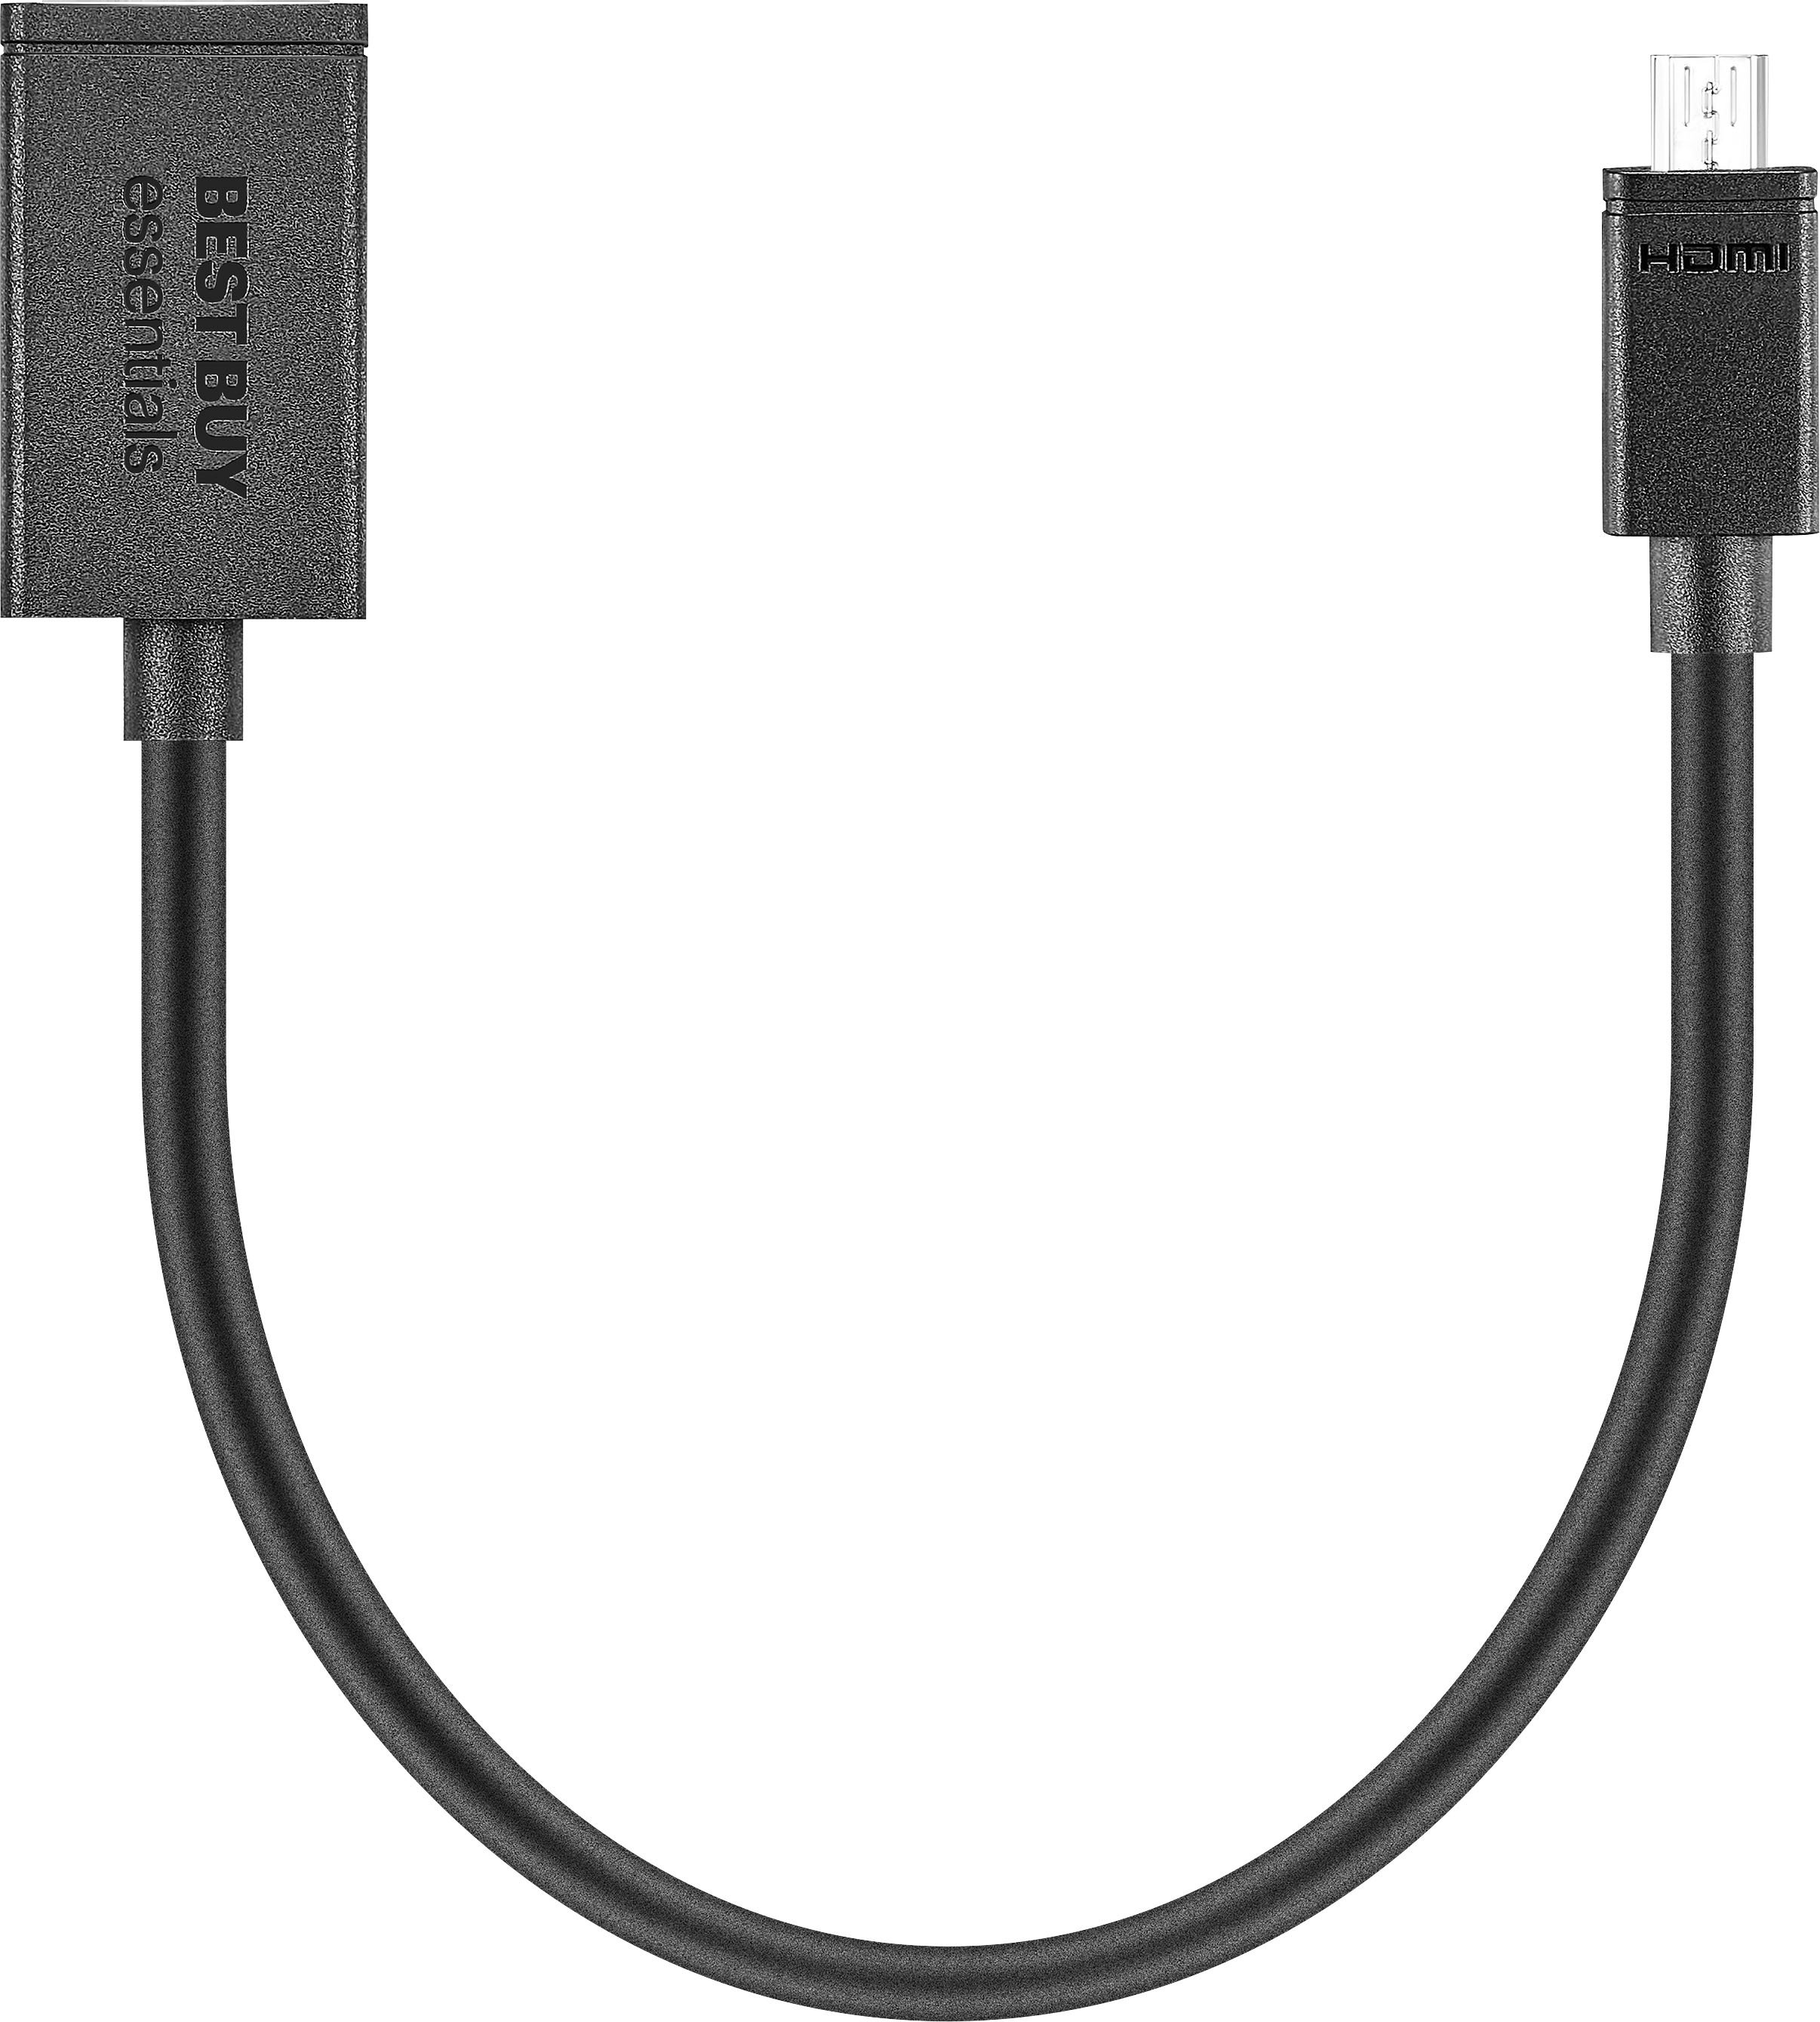 micro hdmi adapter - Best Buy